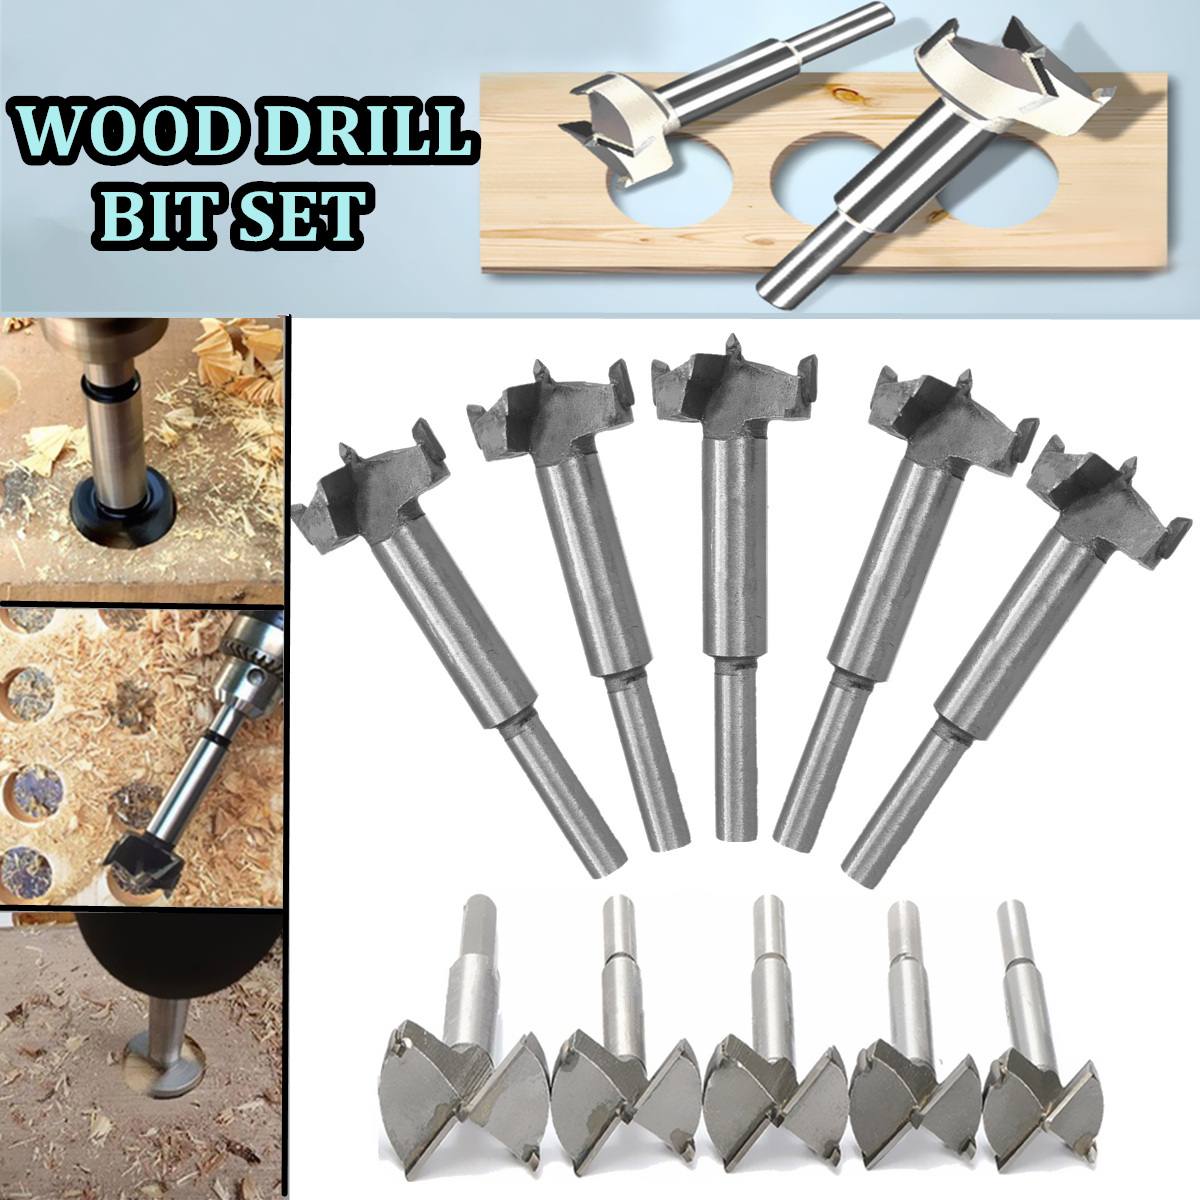 1pcs Forstner Wood Drill Bit Self Centering Hole Saw Cutter Woodworking Tools Set 14mm-65mm Hinge Forstner Drill Bits